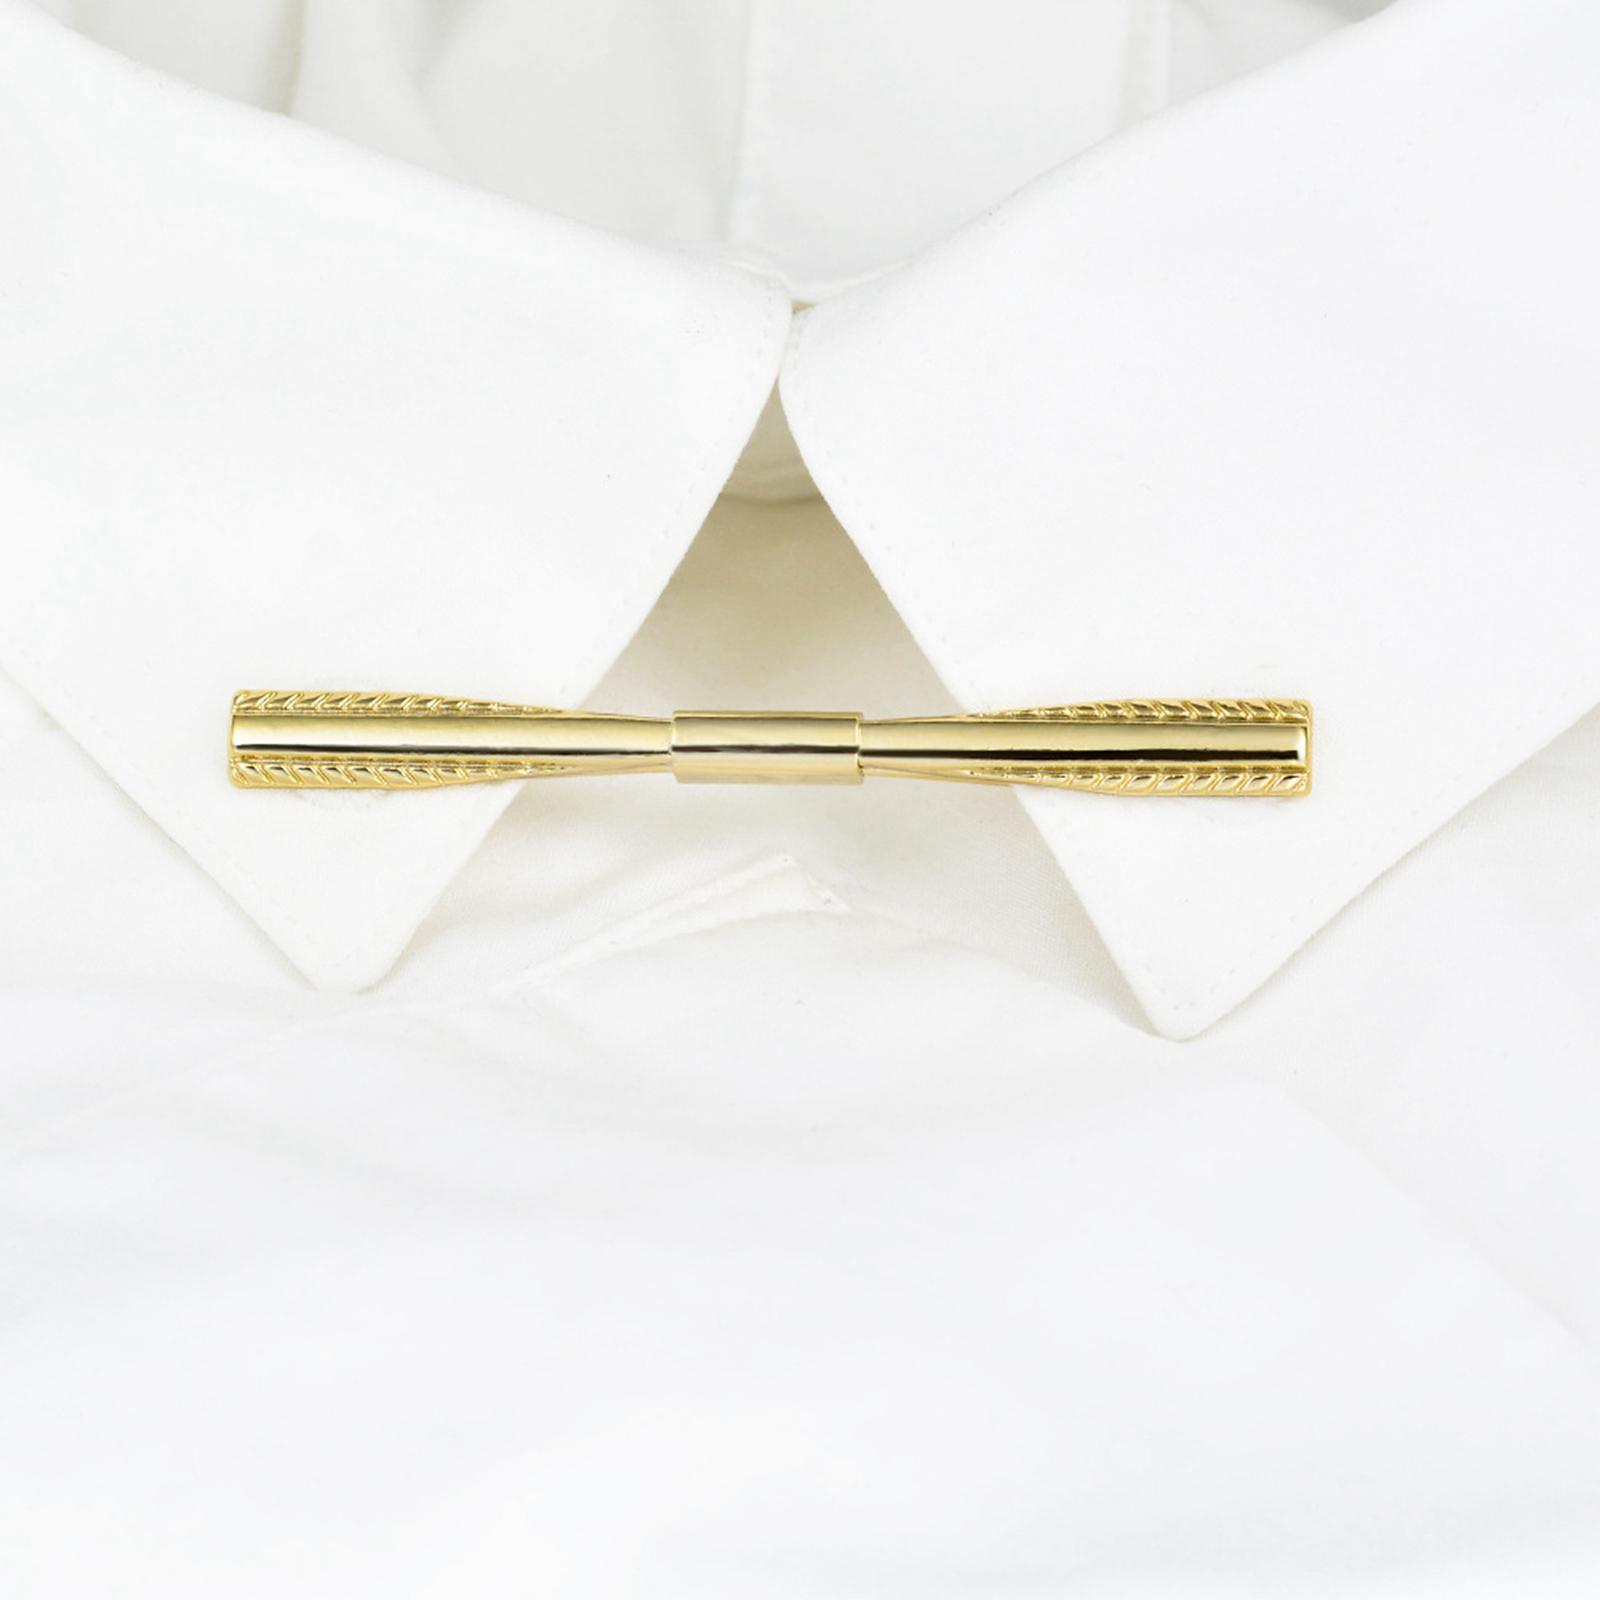 Gentlemen Pinch Clips Tie Pins Shirt Clip Good Texture Length 6cm Classic